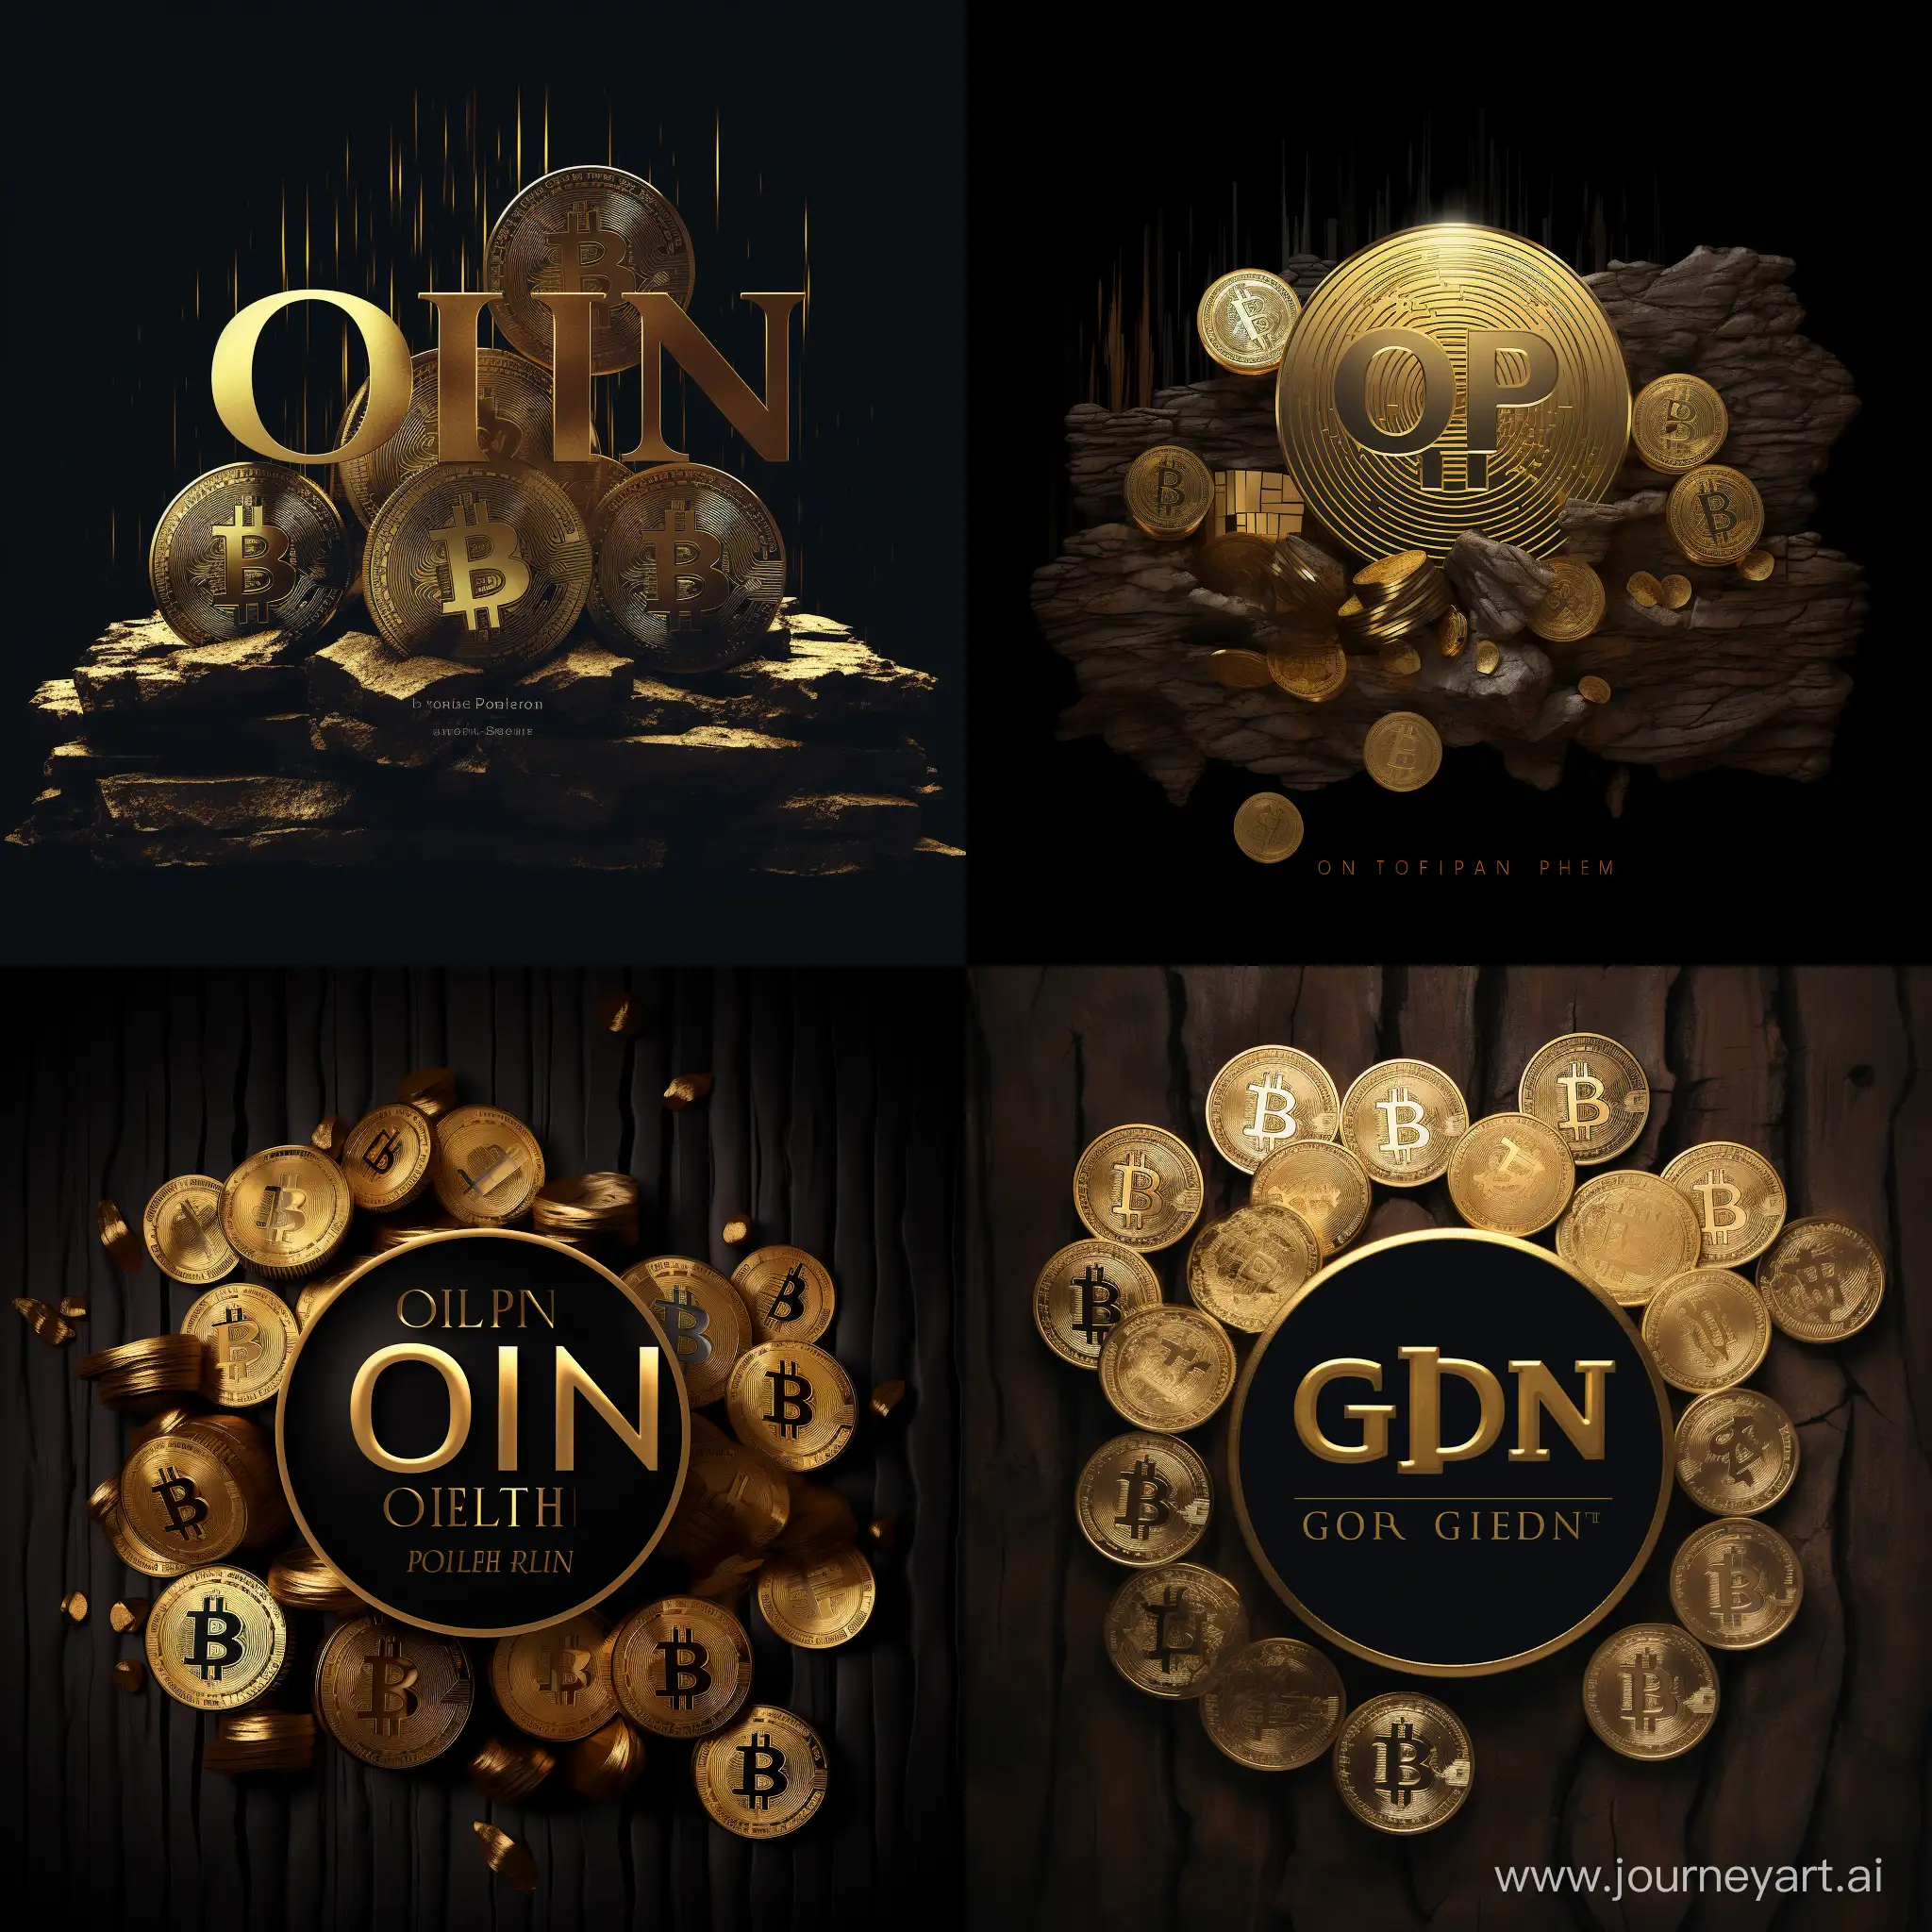 gold logo, text "GOLDEN OPT", joint, black wood bg, around piles of gold bitcoins